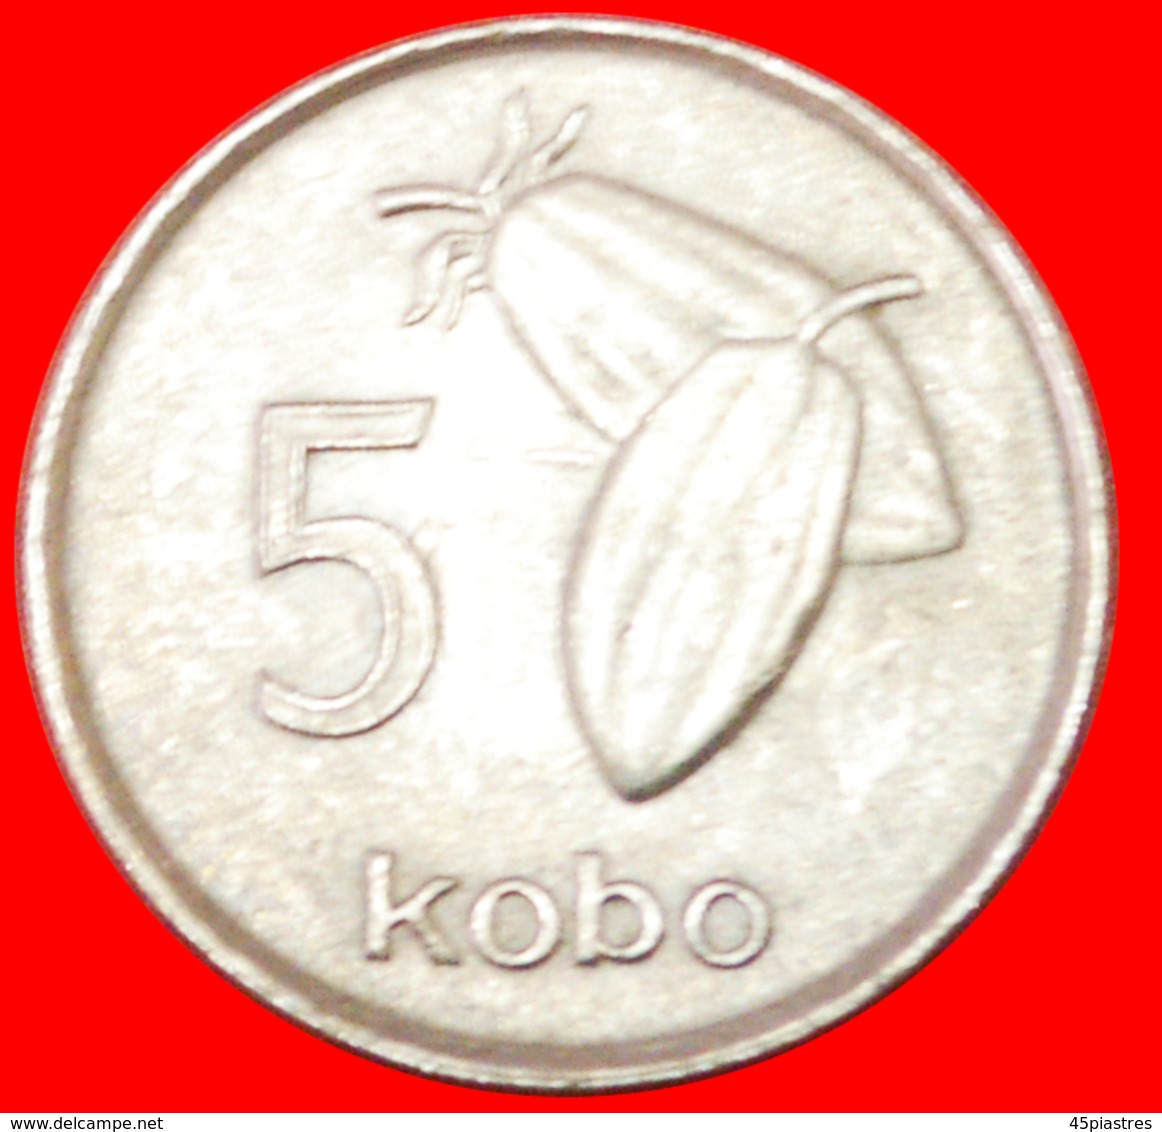 # COCOA: NIGERIA ★ 5 KOBO 1974 MINT LUSTER! LOW START ★ NO RESERVE! - Nigeria